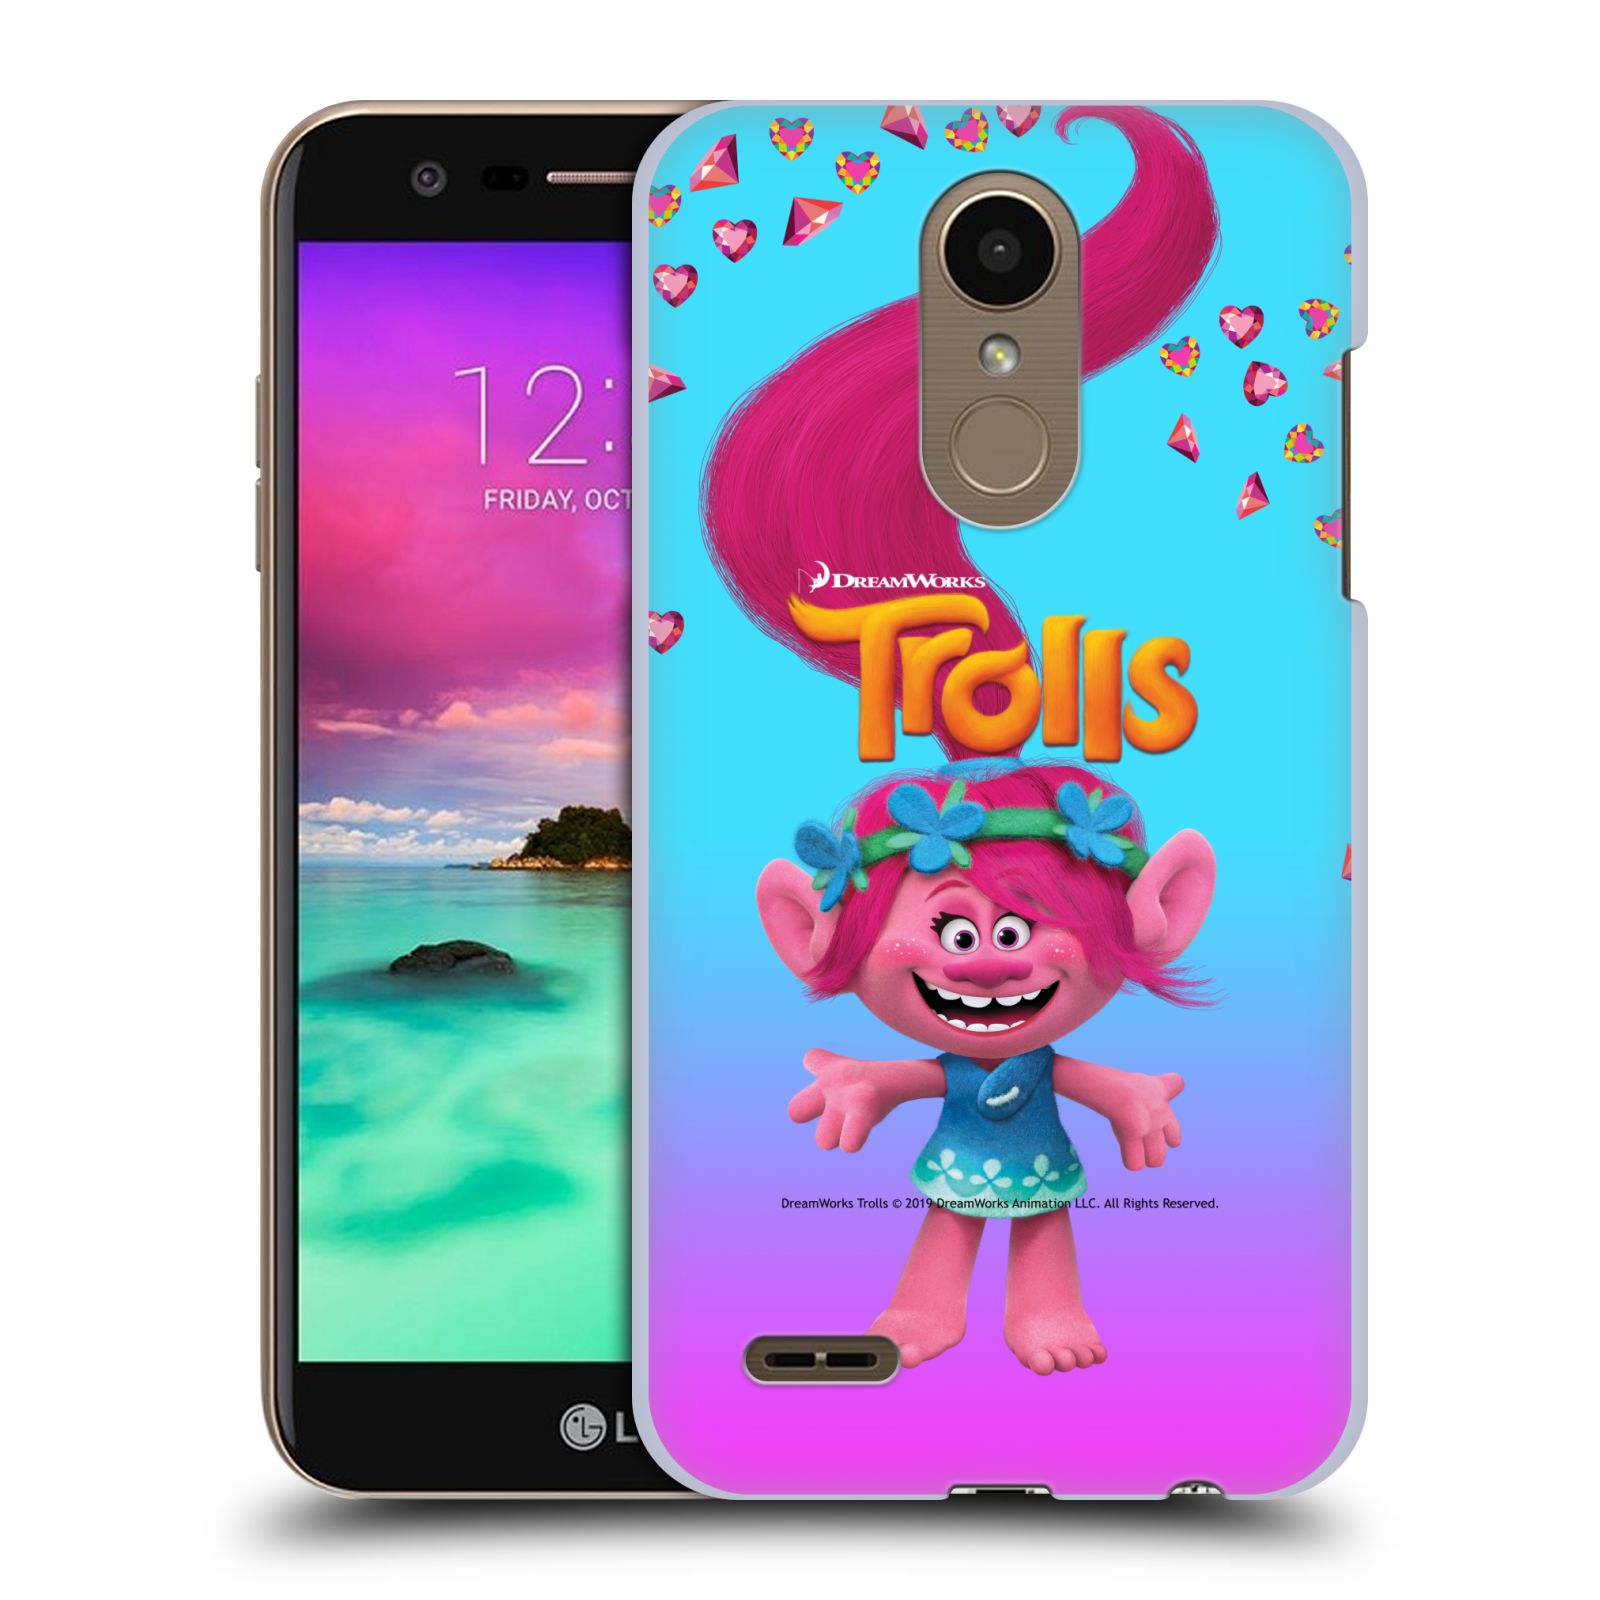 Pouzdro na mobil LG K10 2018 - HEAD CASE - Pohádka - Trollové skřítek holčička Poppy